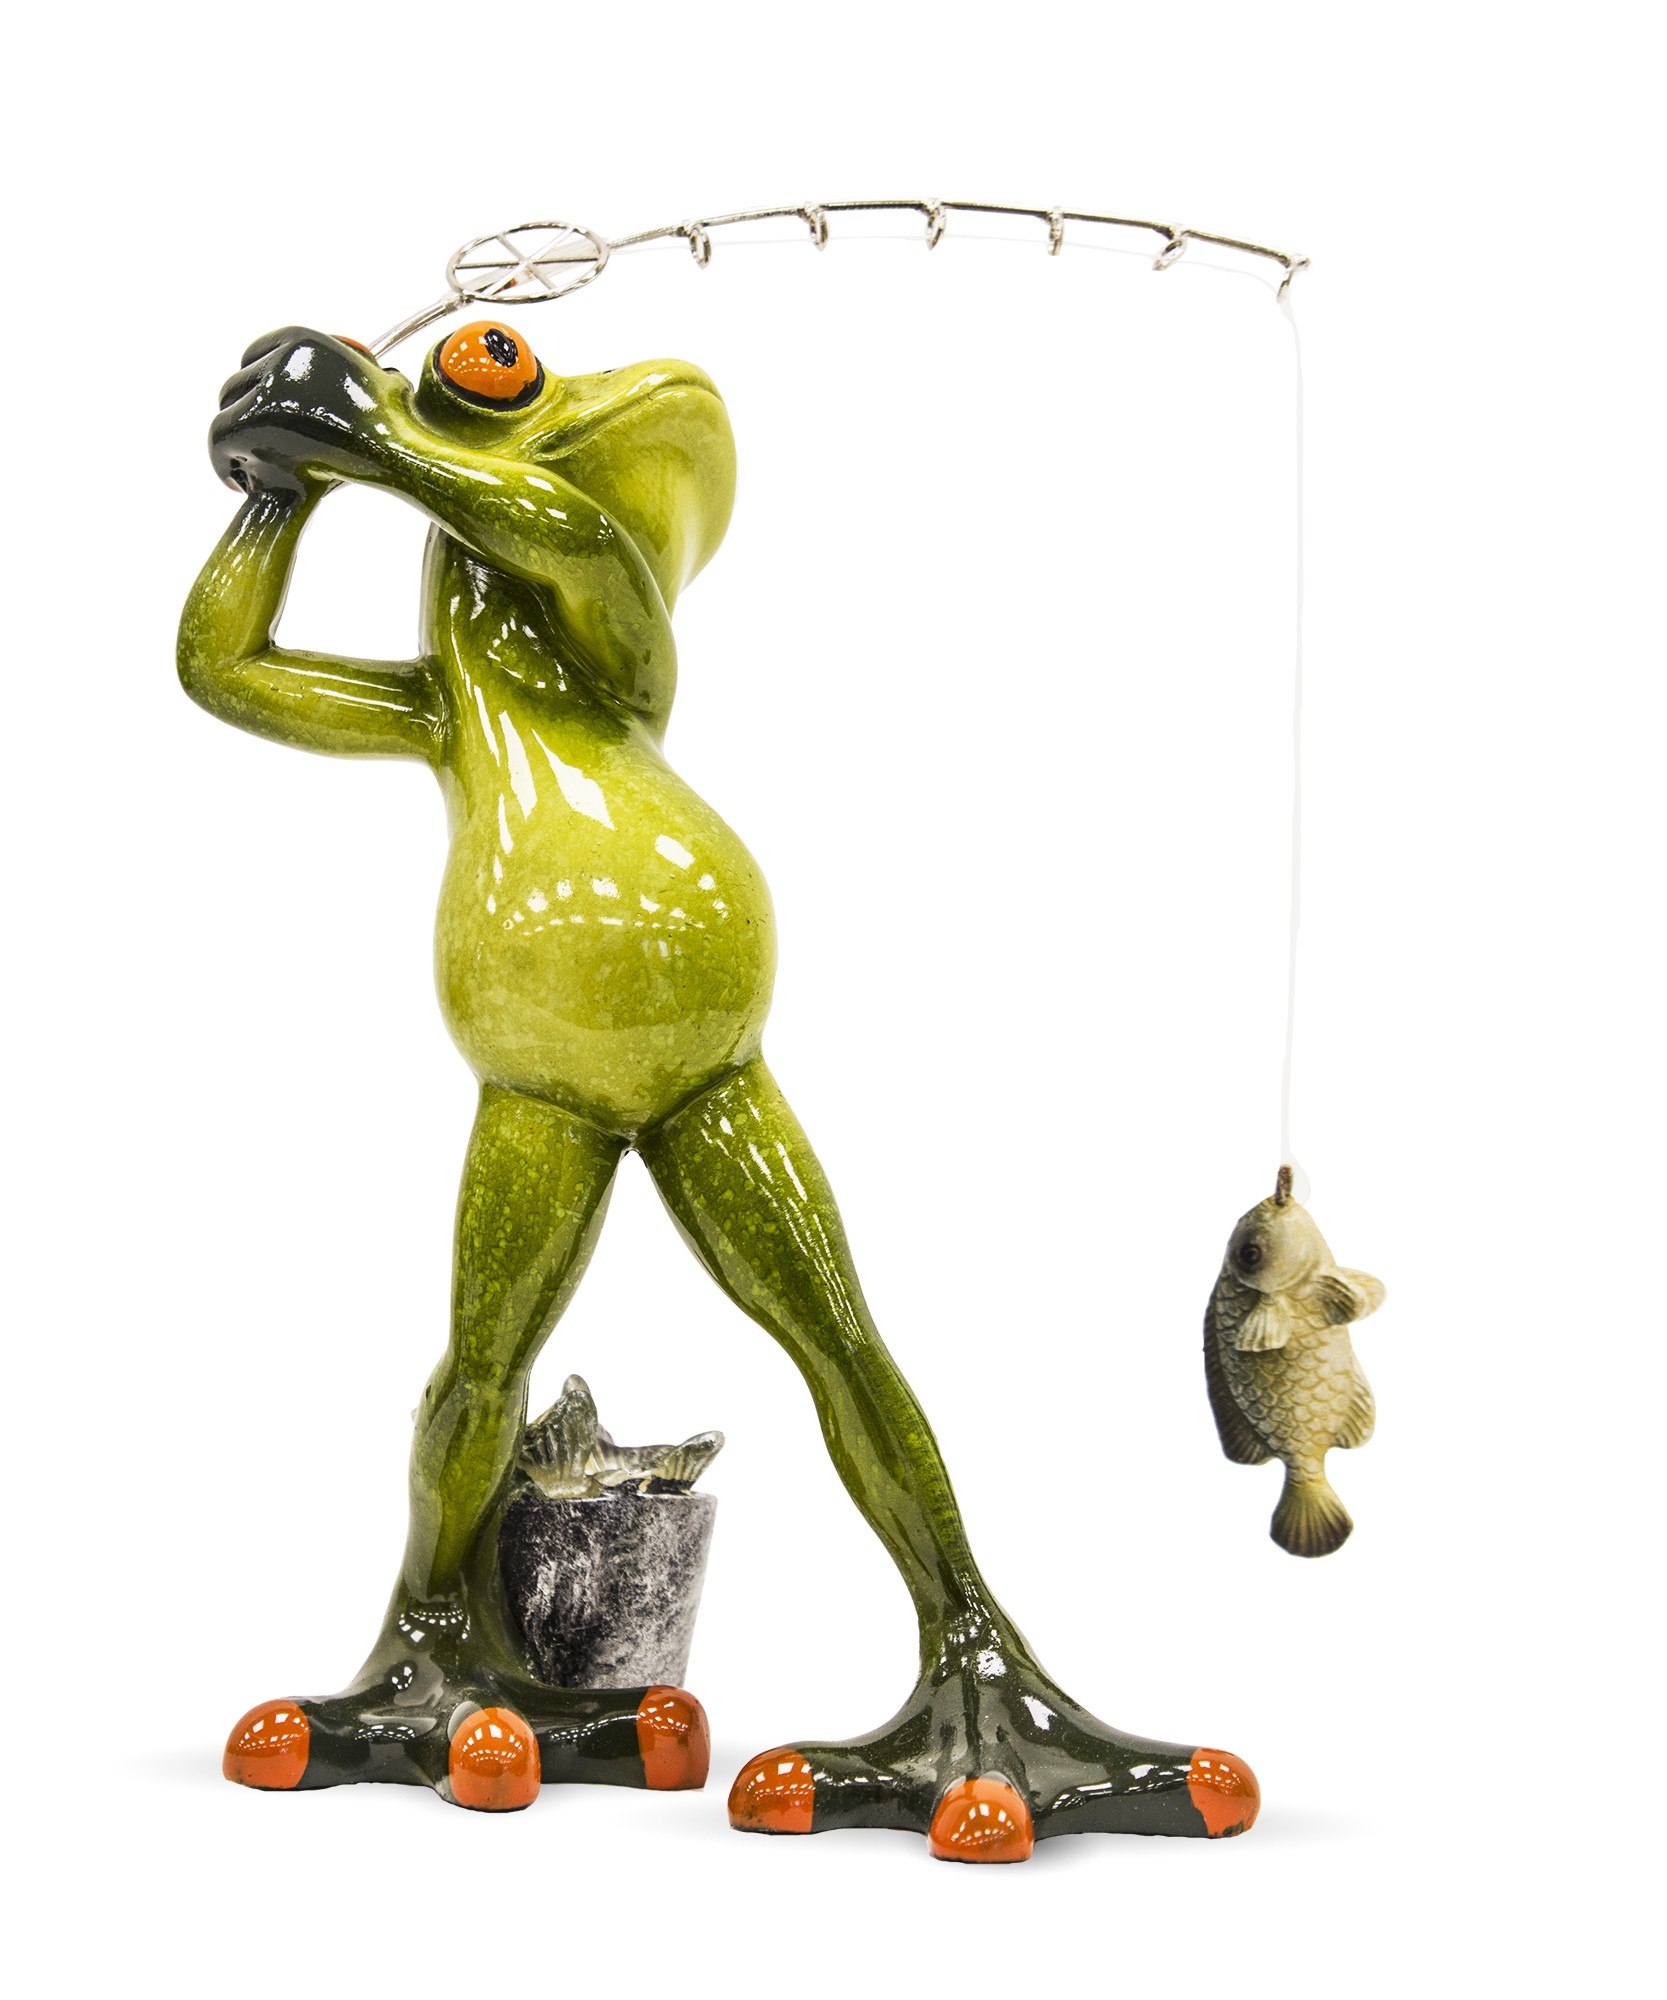 Frog Figurine Angler with a fish 118554